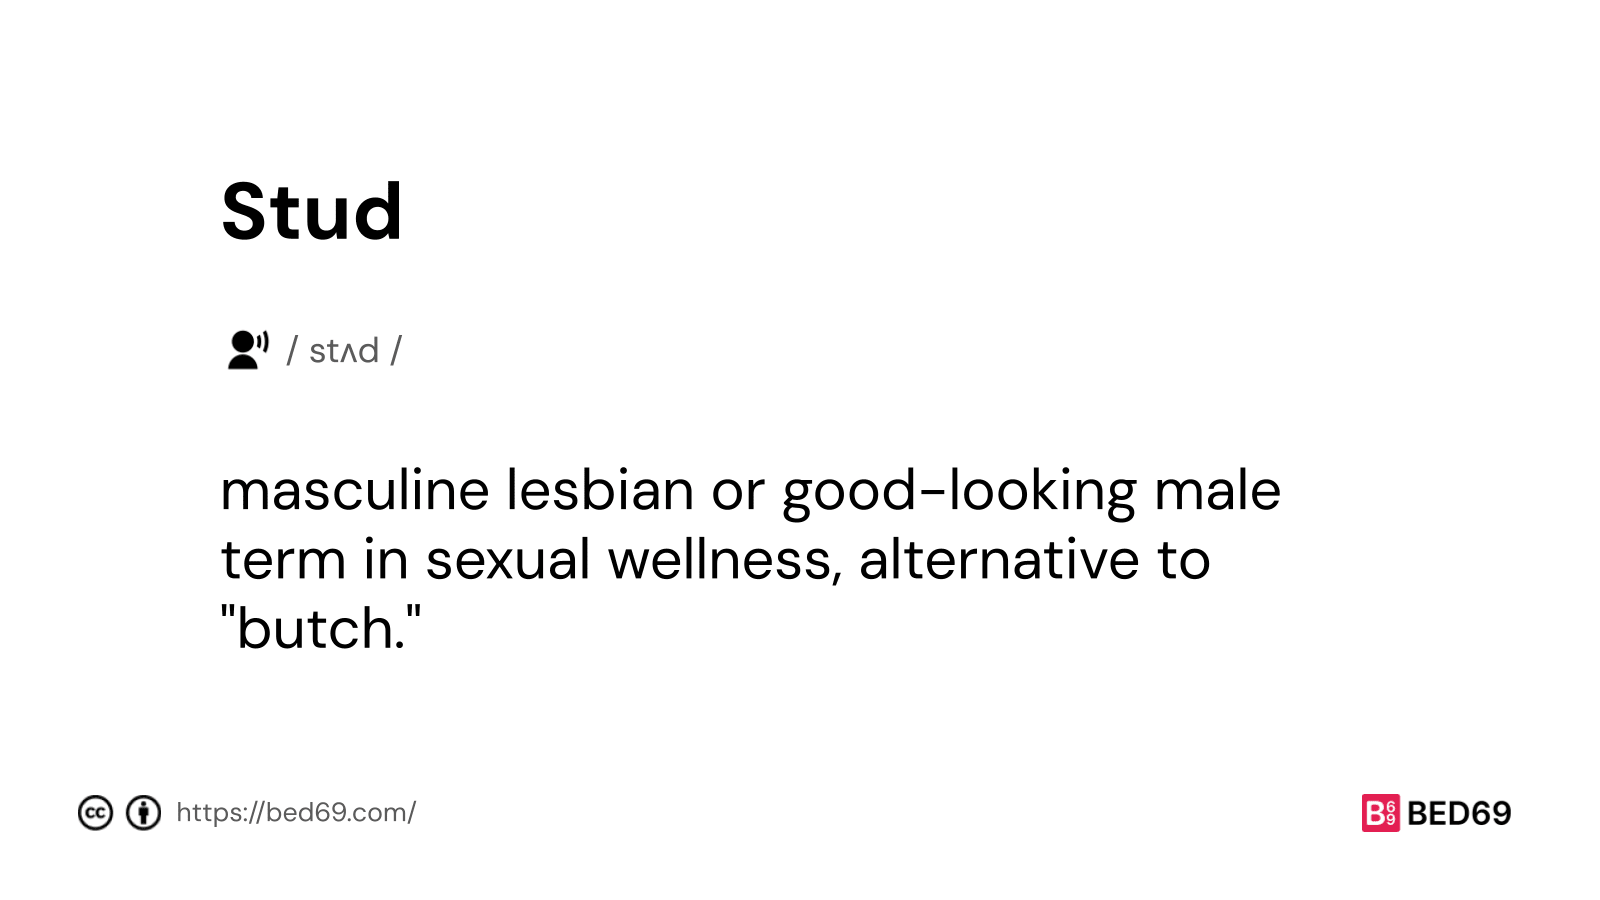 Stud - Word Definition